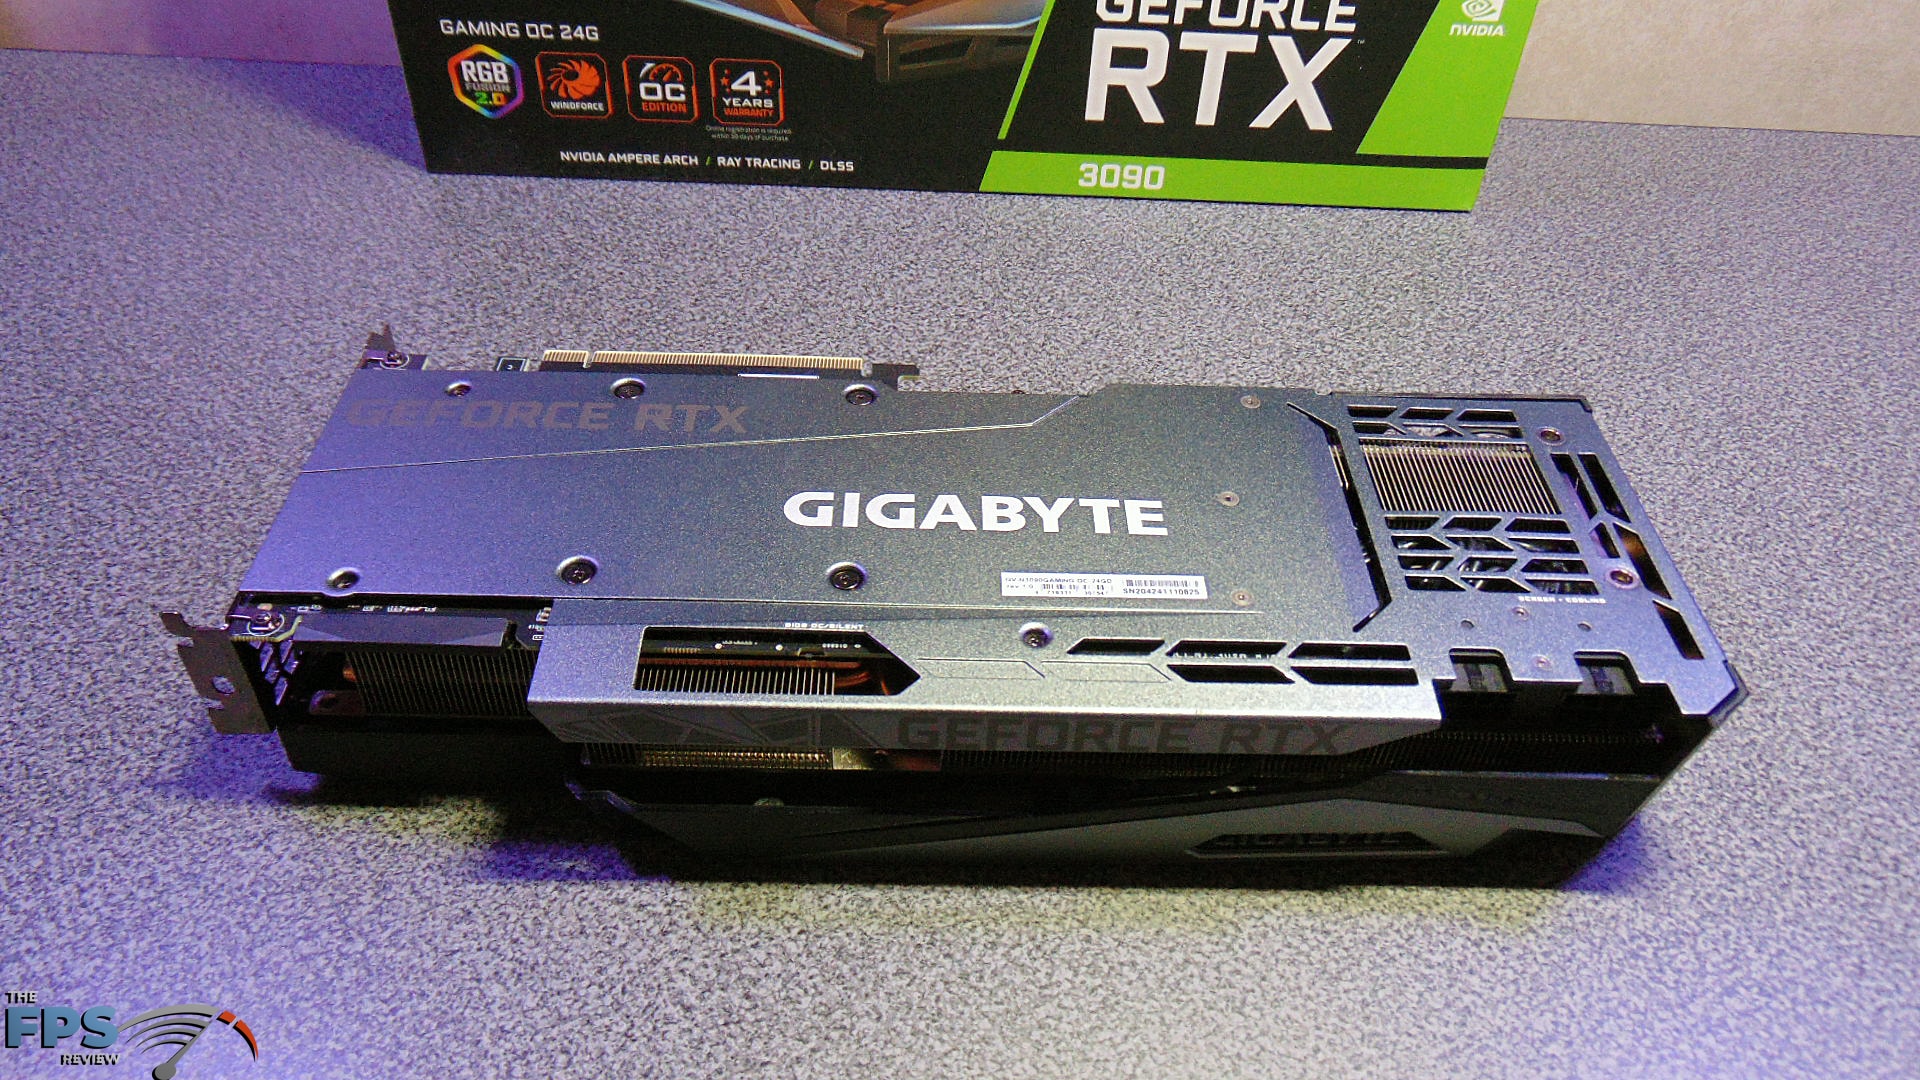 GIGABYTE GeForce RTX 3090 GAMING OC Review